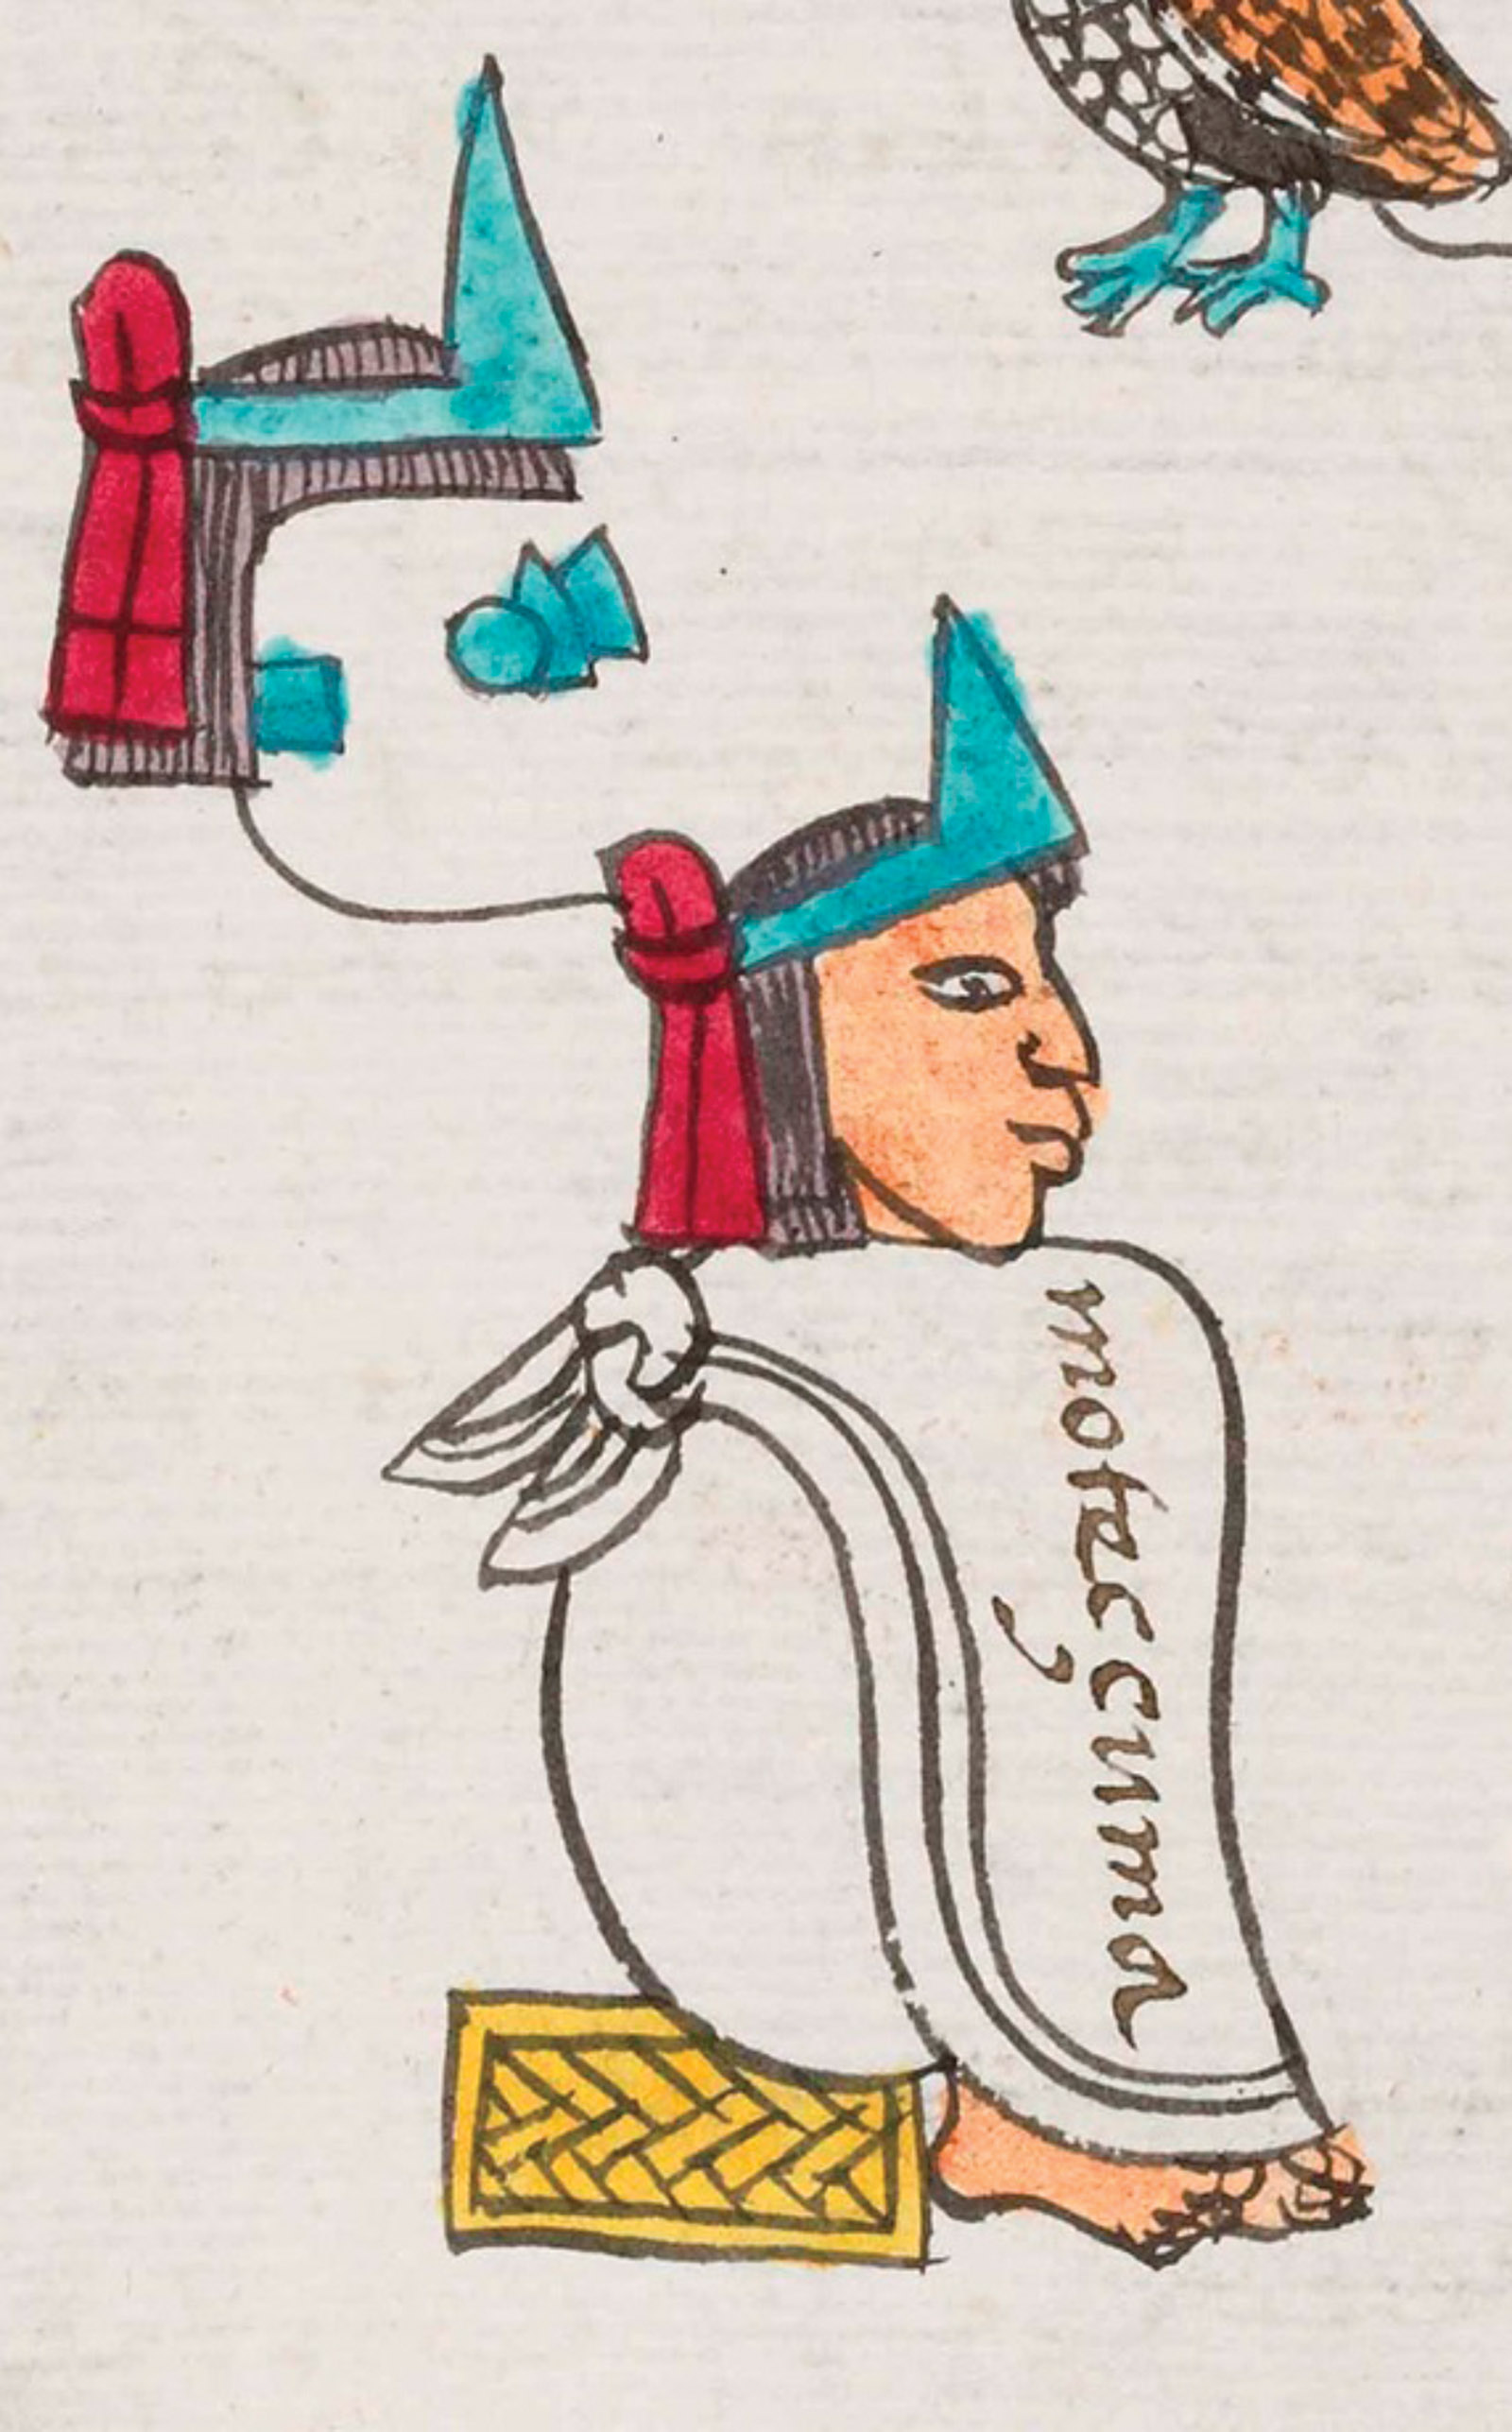 The Aztec emperor Moctezuma; detail from the Codex Mendoza